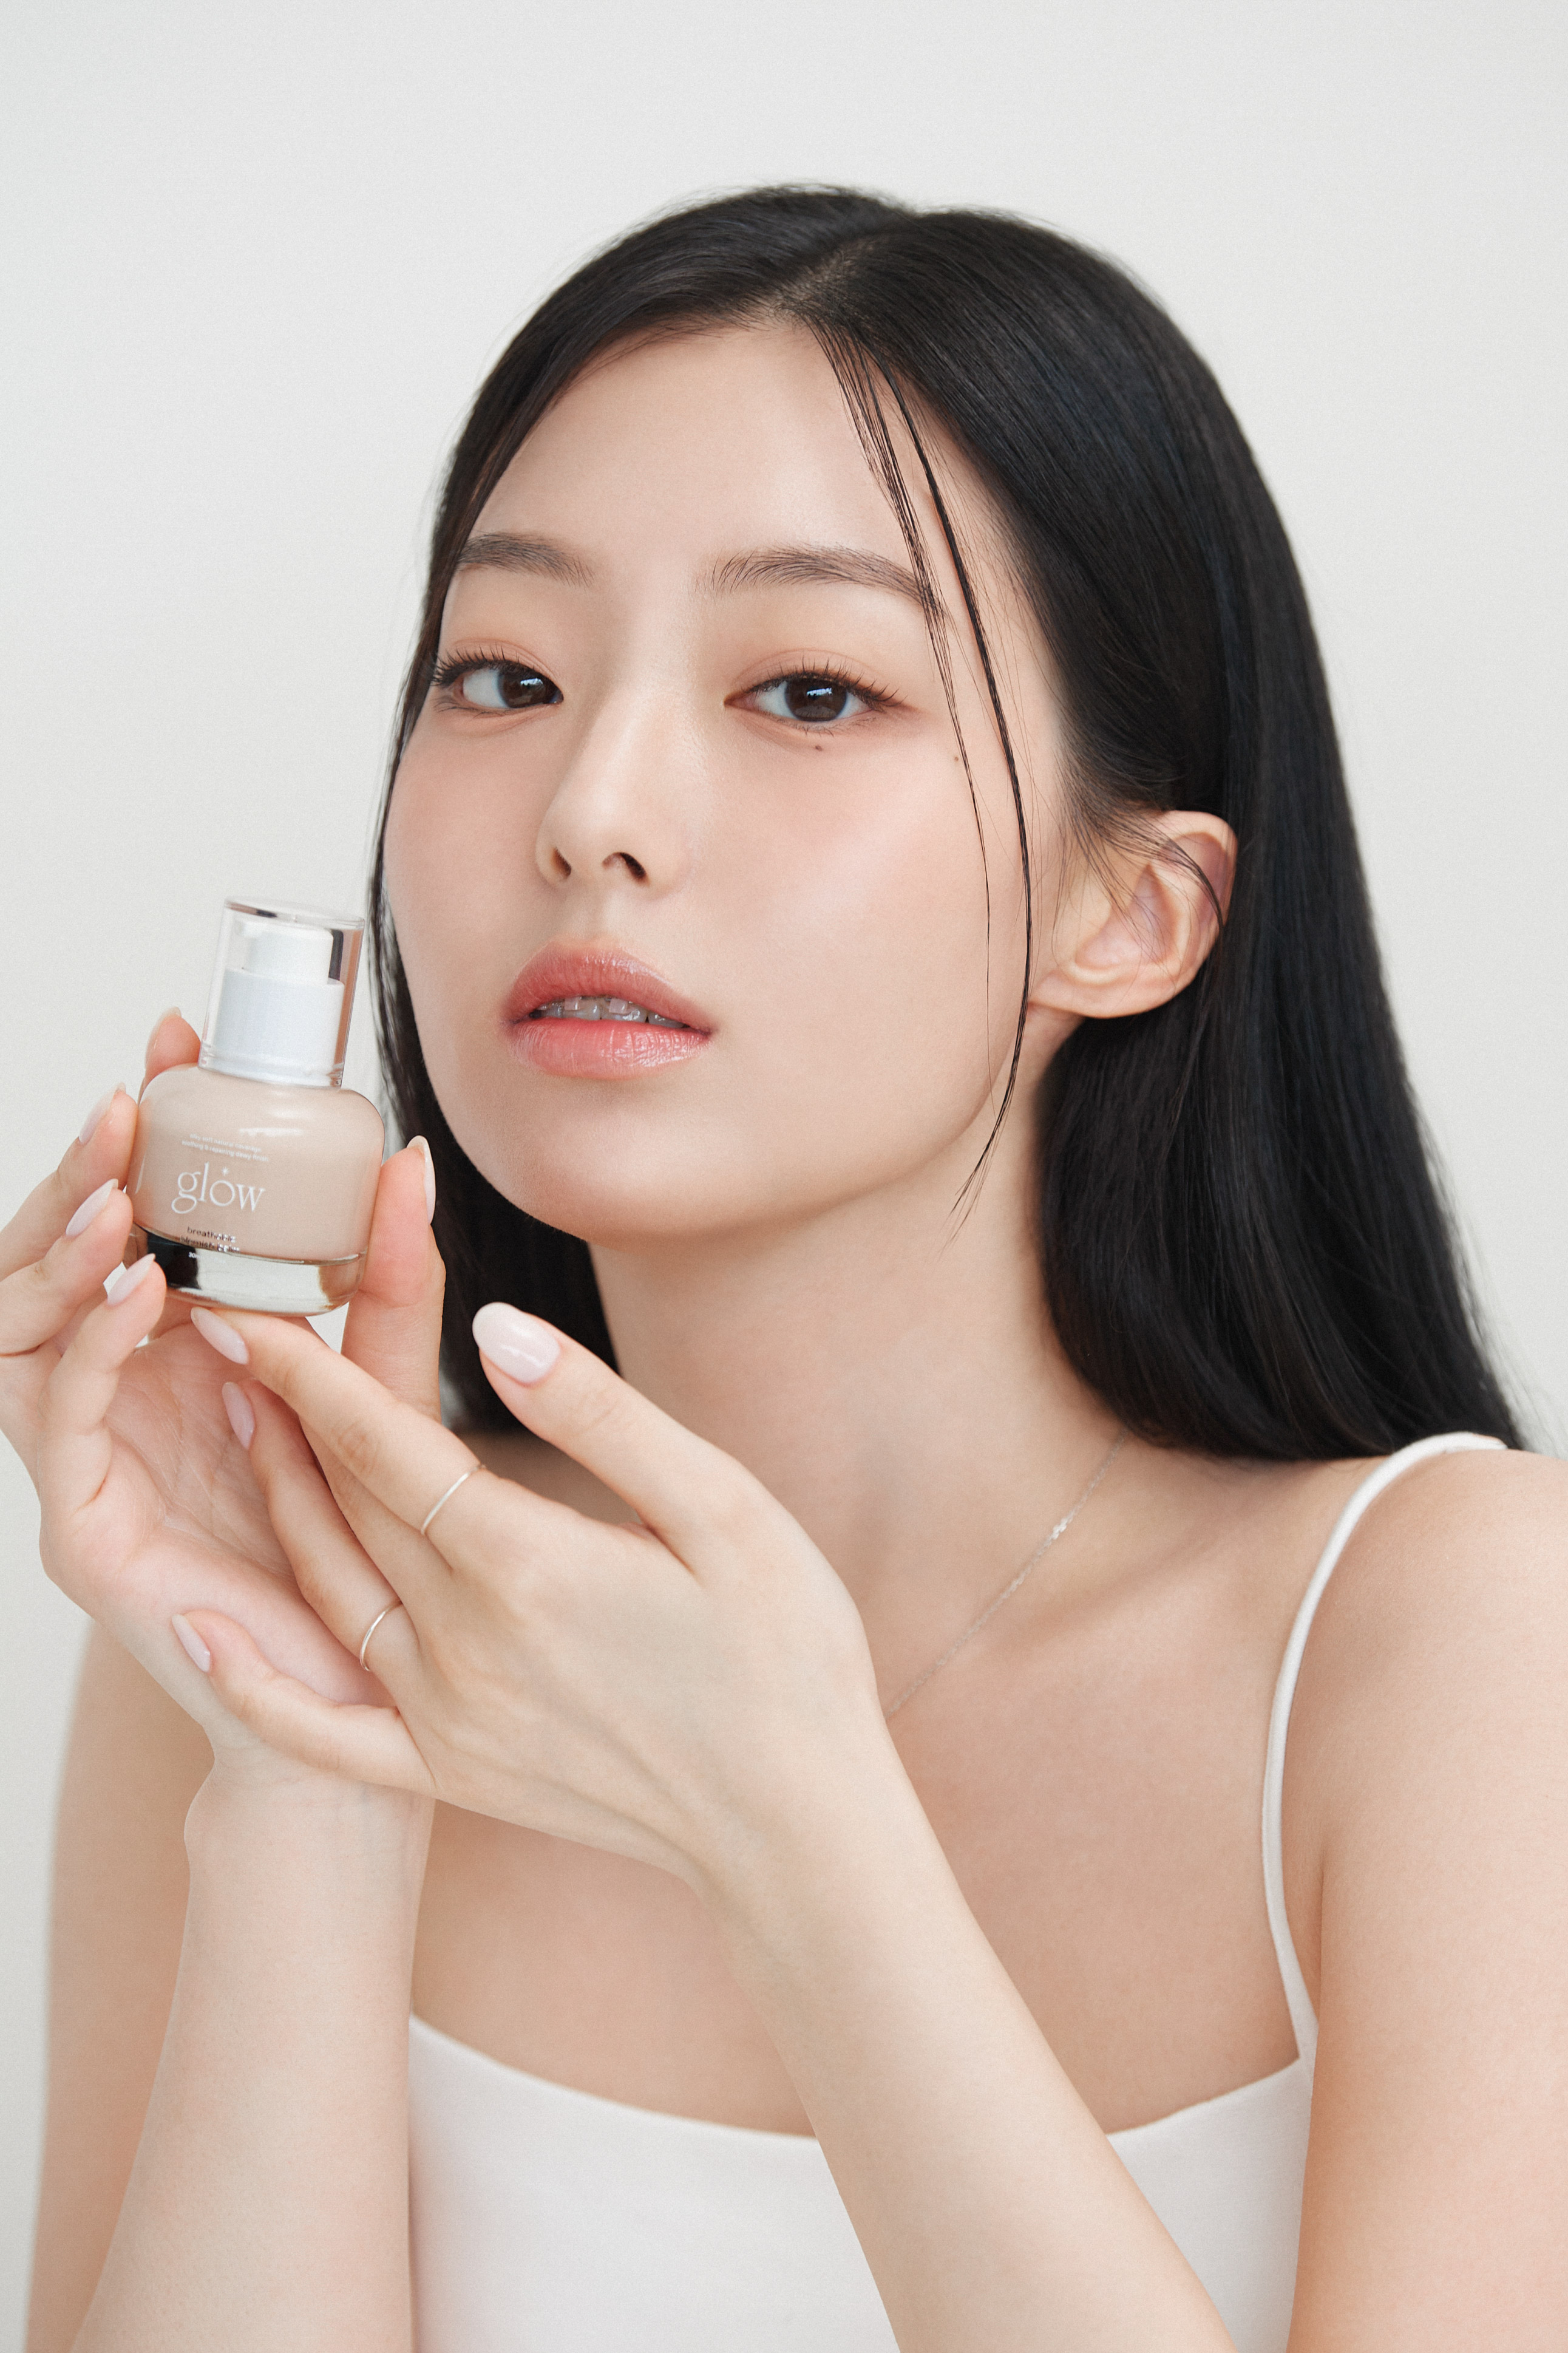 HEMEKO - Trendy Korean Beauty Archive